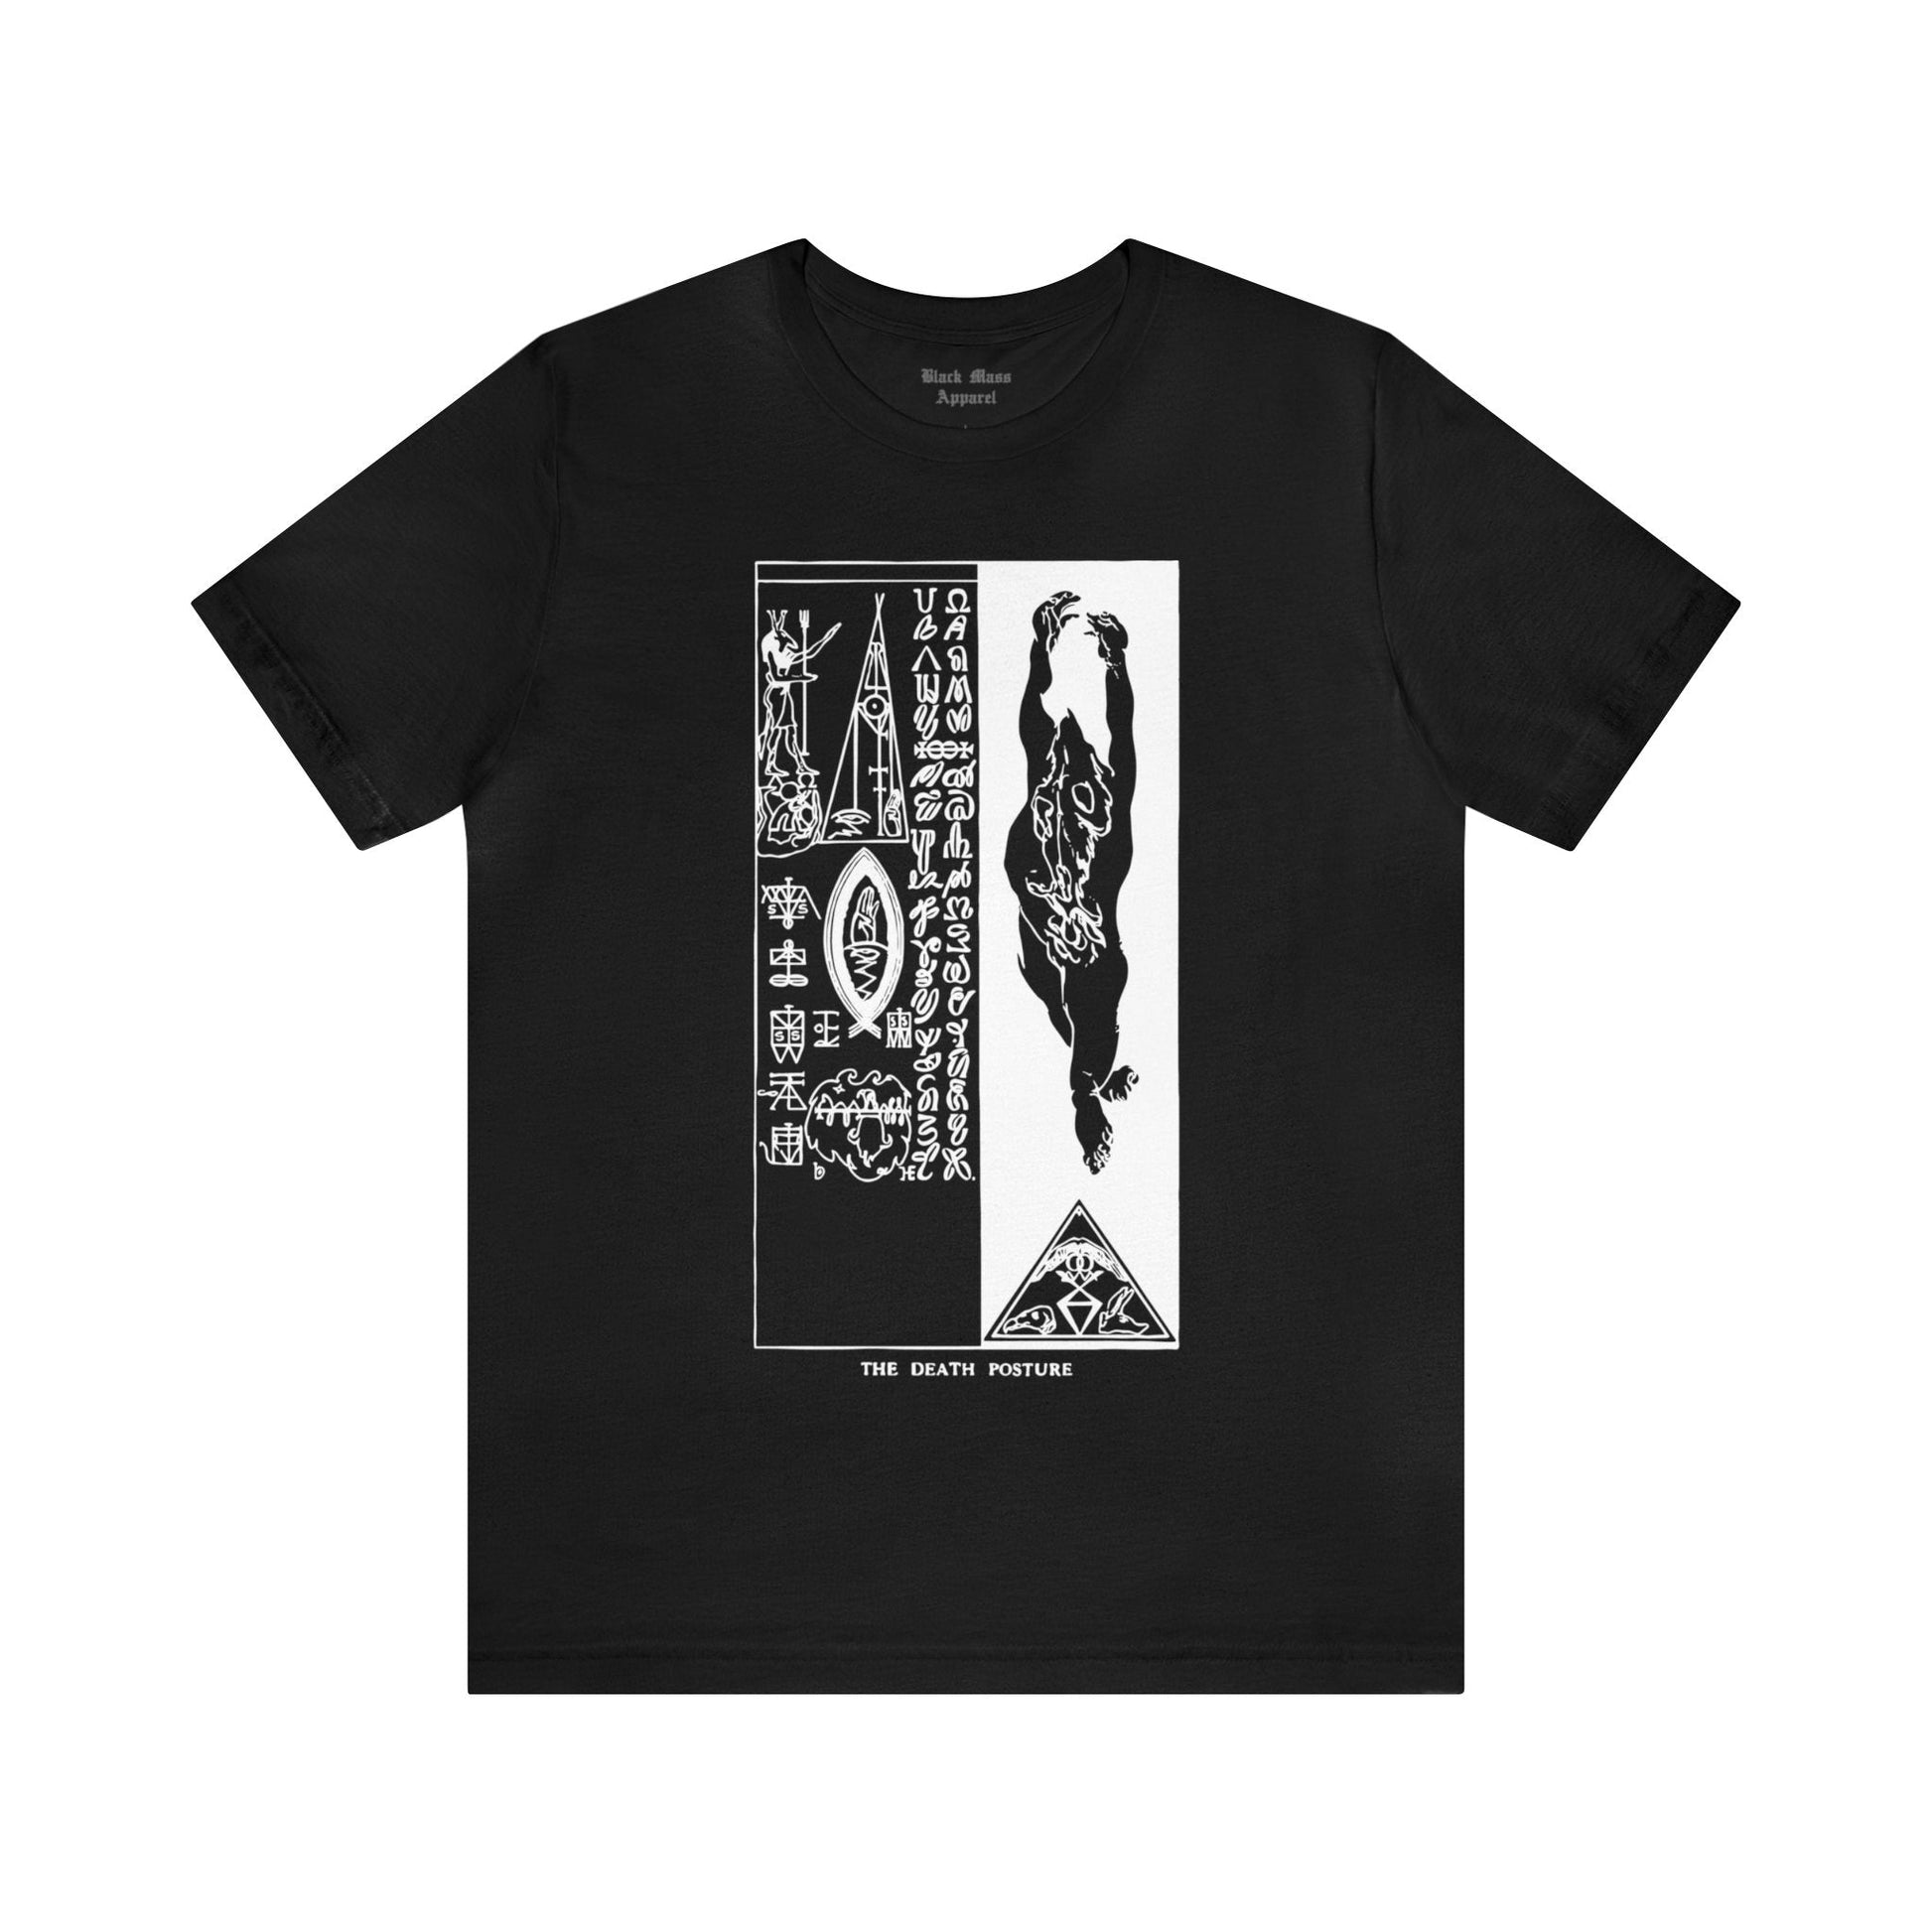 The Death Posture - Black Mass Apparel - T-Shirt